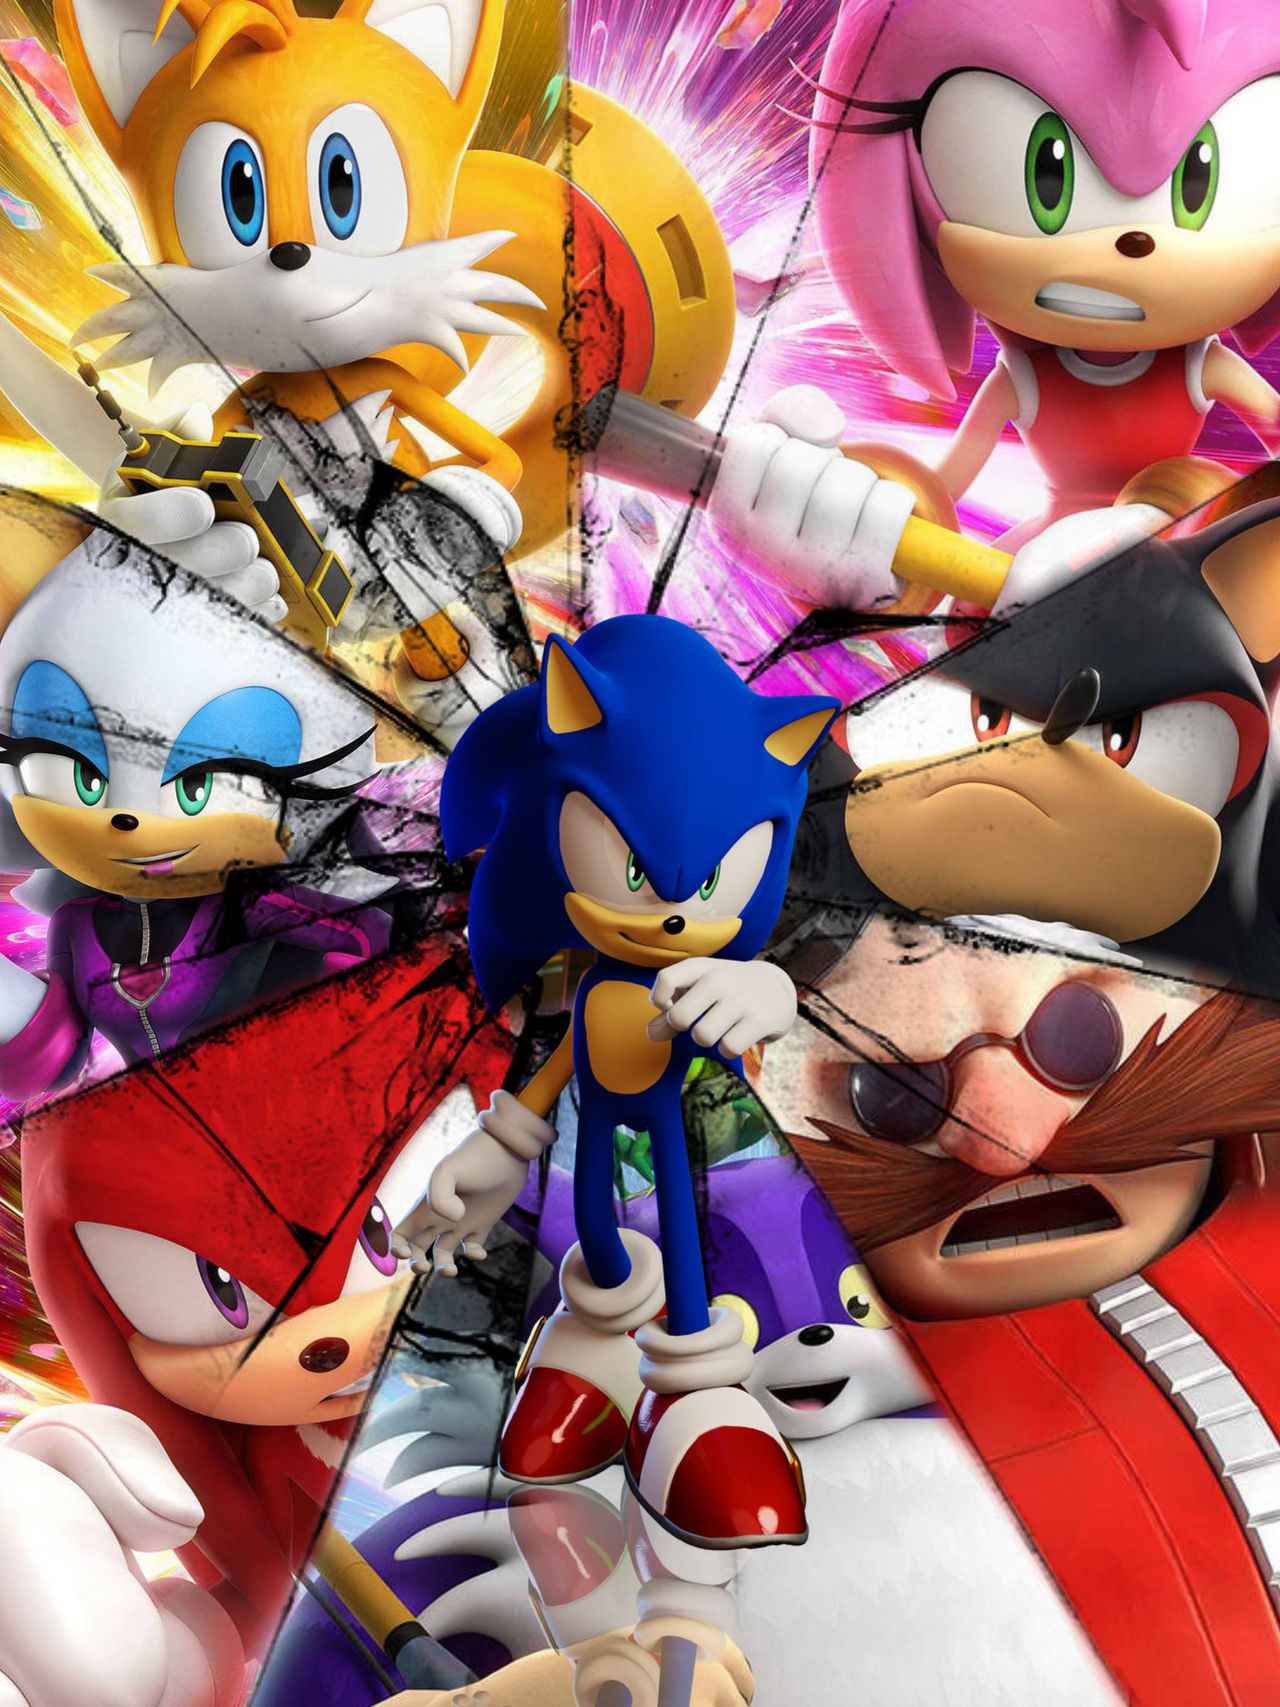 Sonic Prime Season 2 Render by Danic574 on DeviantArt